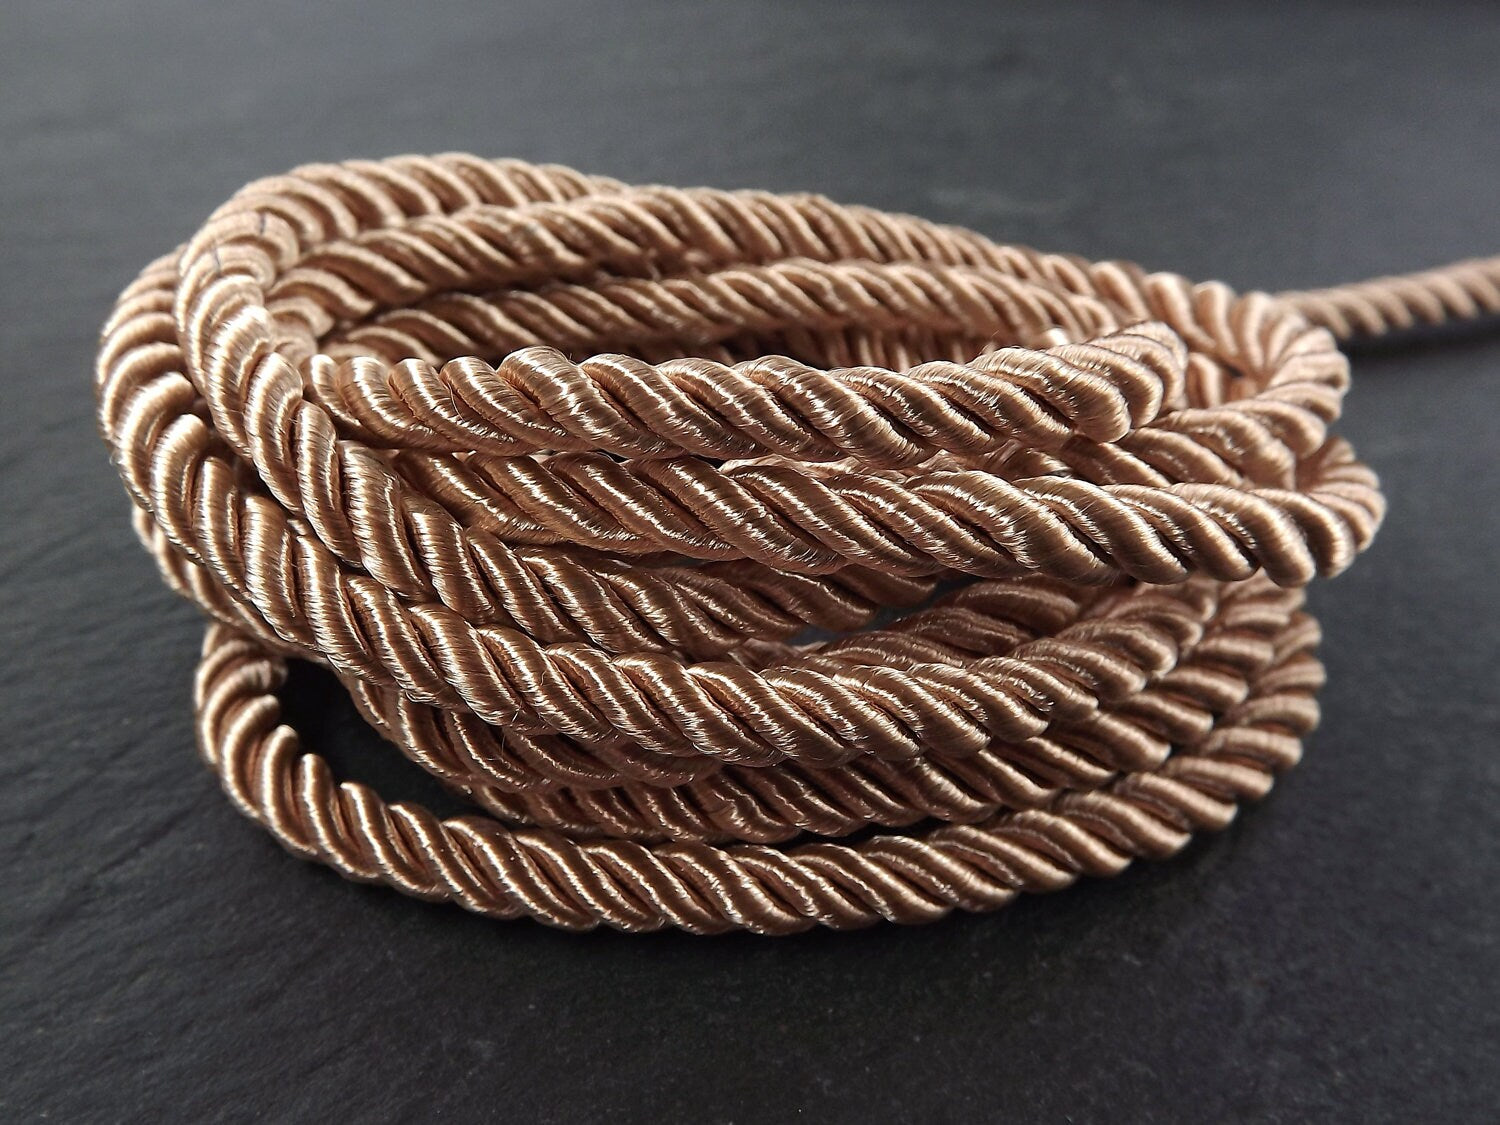 5mm Sepia Beige Rope, Beige, Cord, Twisted Cord, Rayon, Satin, Rope, Silk Braid, Twisted Rope, Sepia - 3 Ply Twist - 1 meters - 1.09 Yards